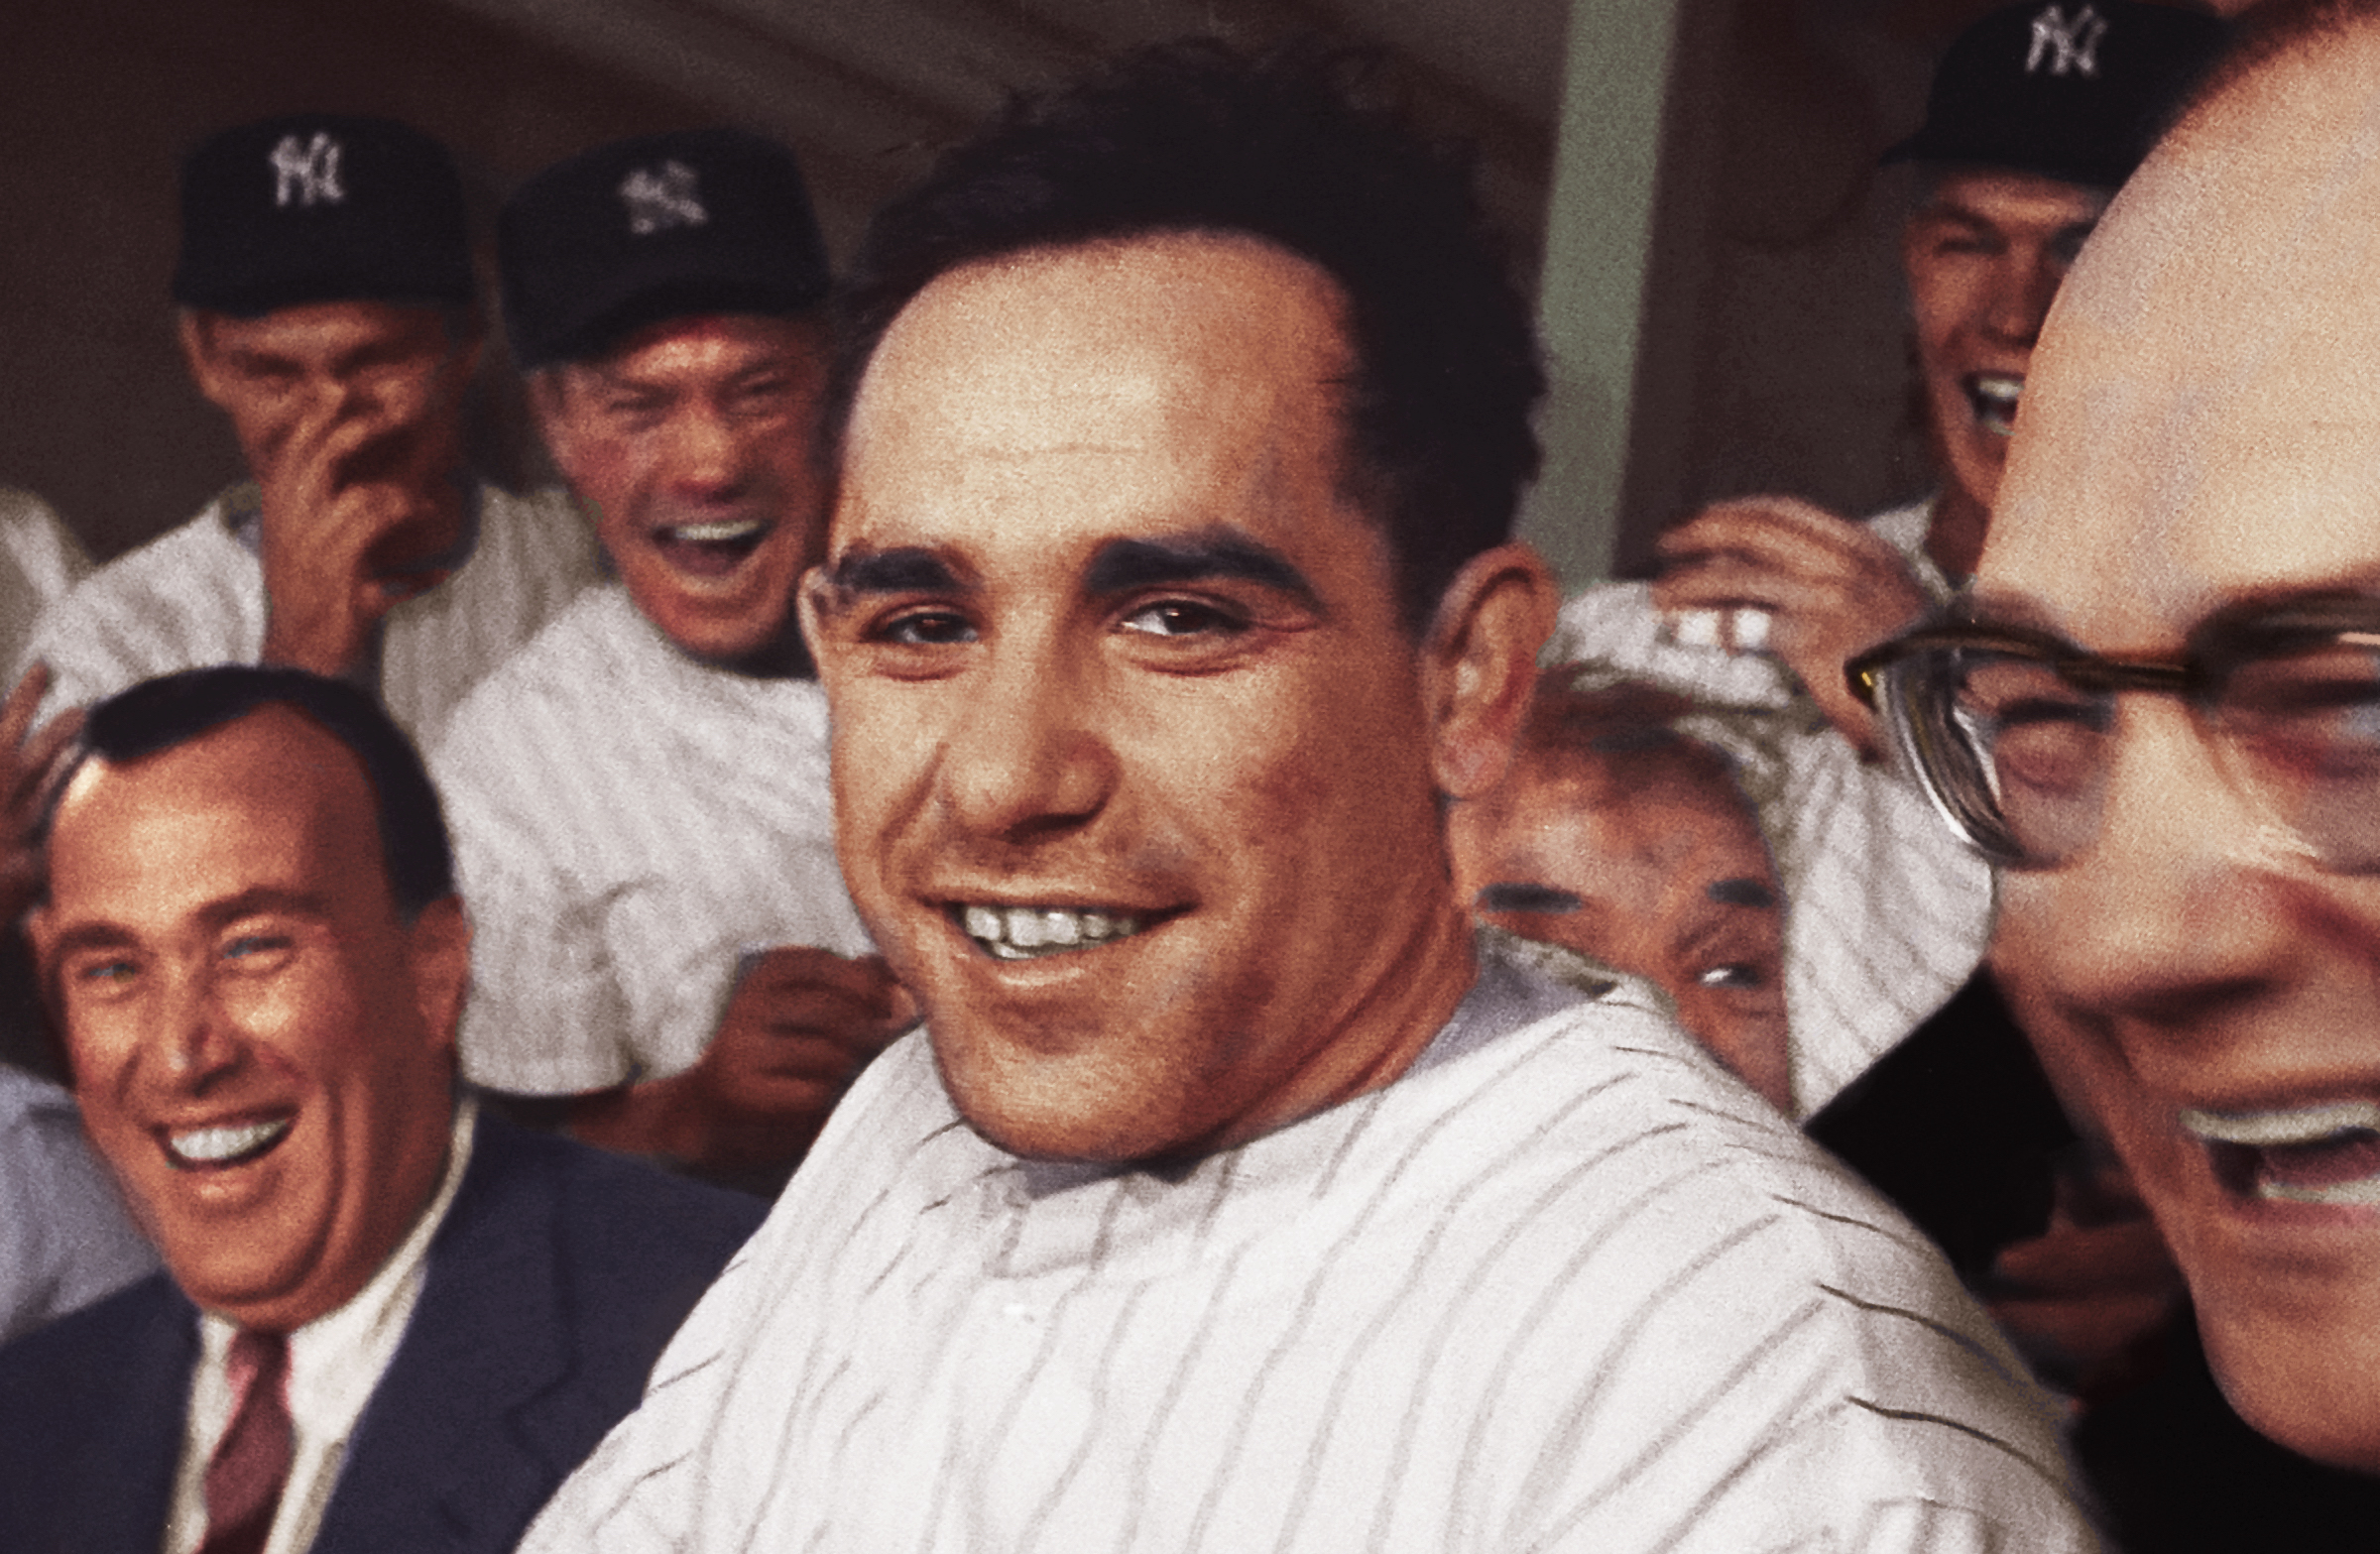 Yogi Berra Museum on X: The stories Joe had always a character